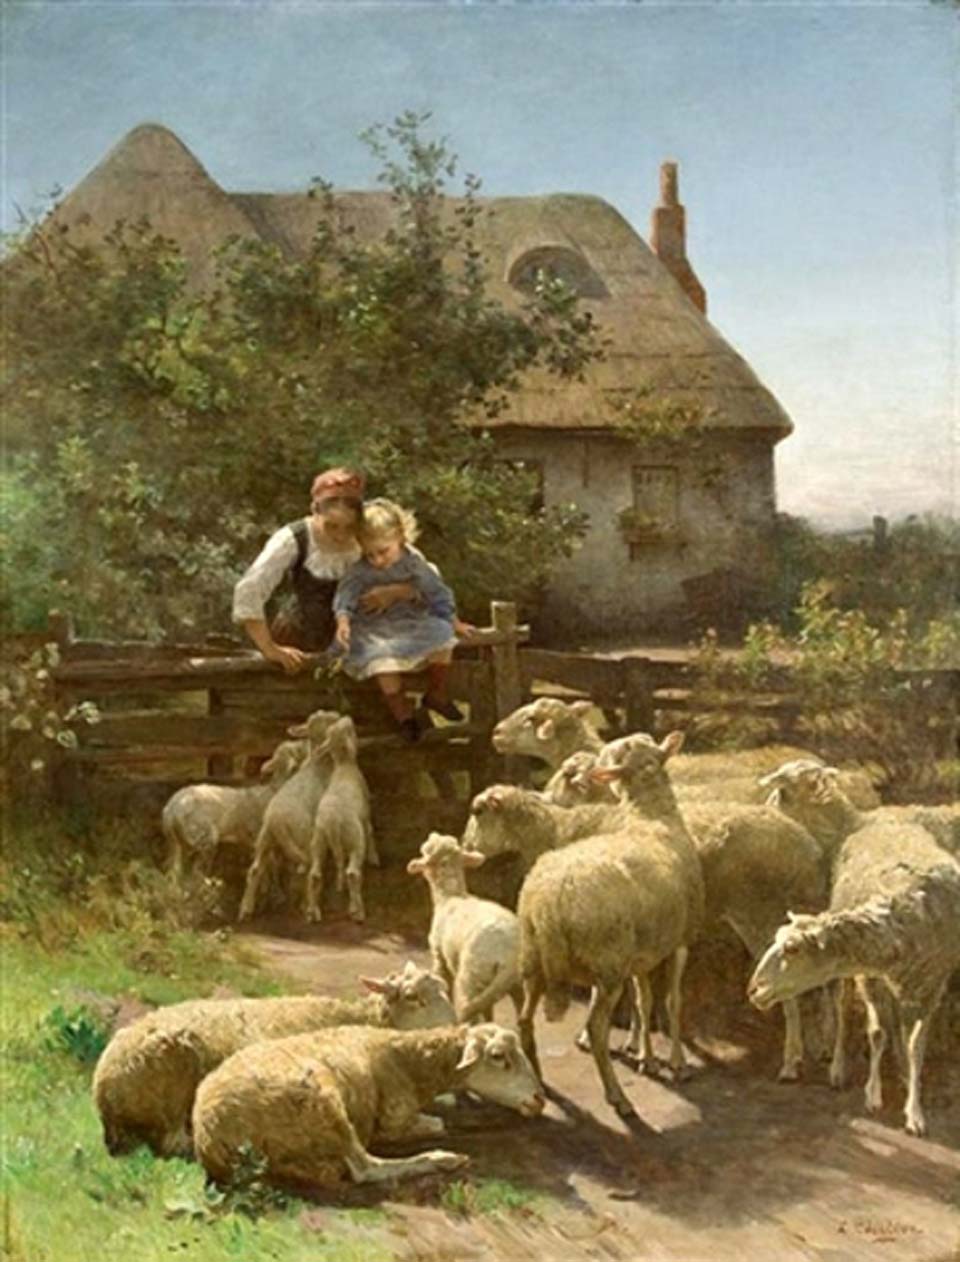 Feeding the sheep